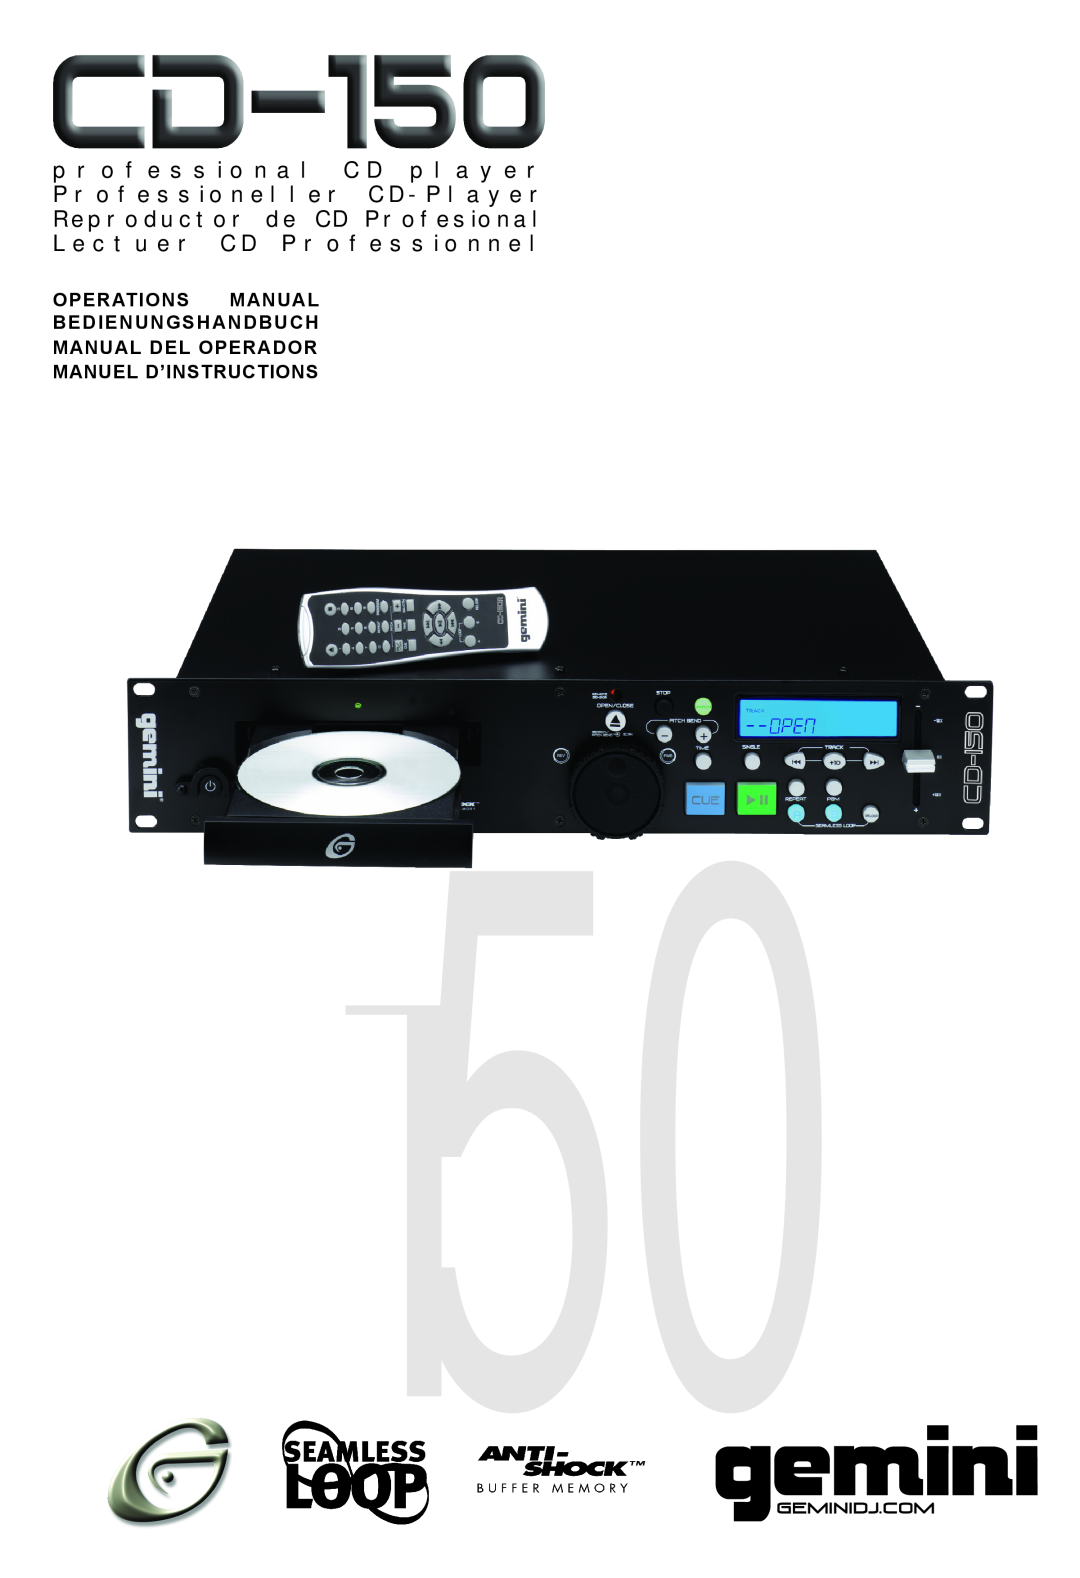 Gemini CD-150 manual Operations Manual Bedienungshandbuch, Manual Del Operador Manuel D’Instructions 